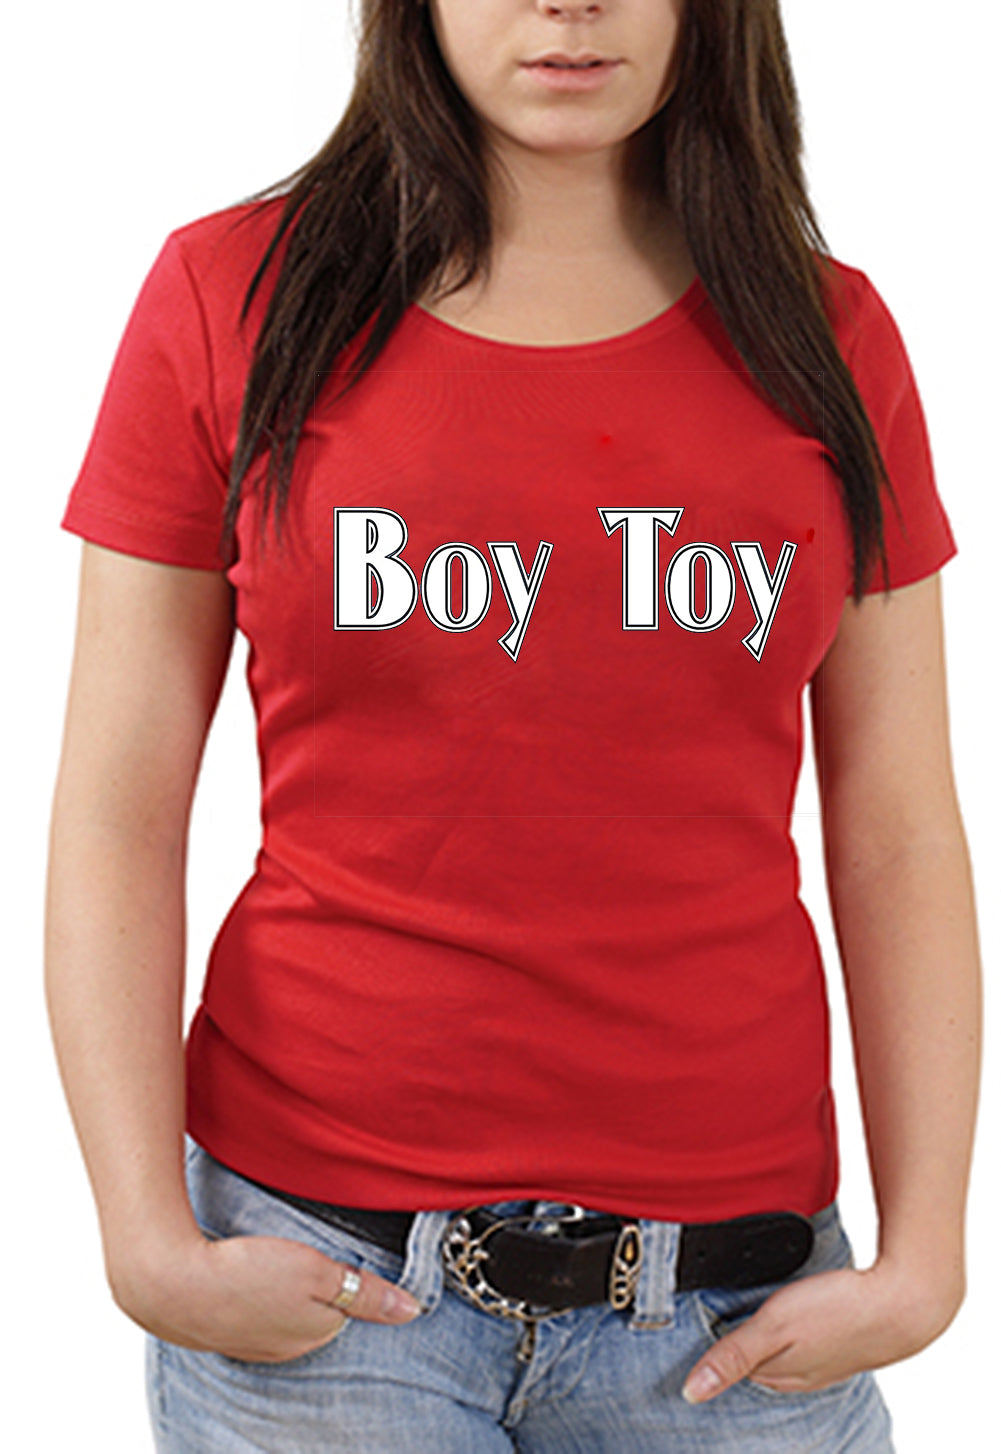  Boy Toy Girls T-Shirt